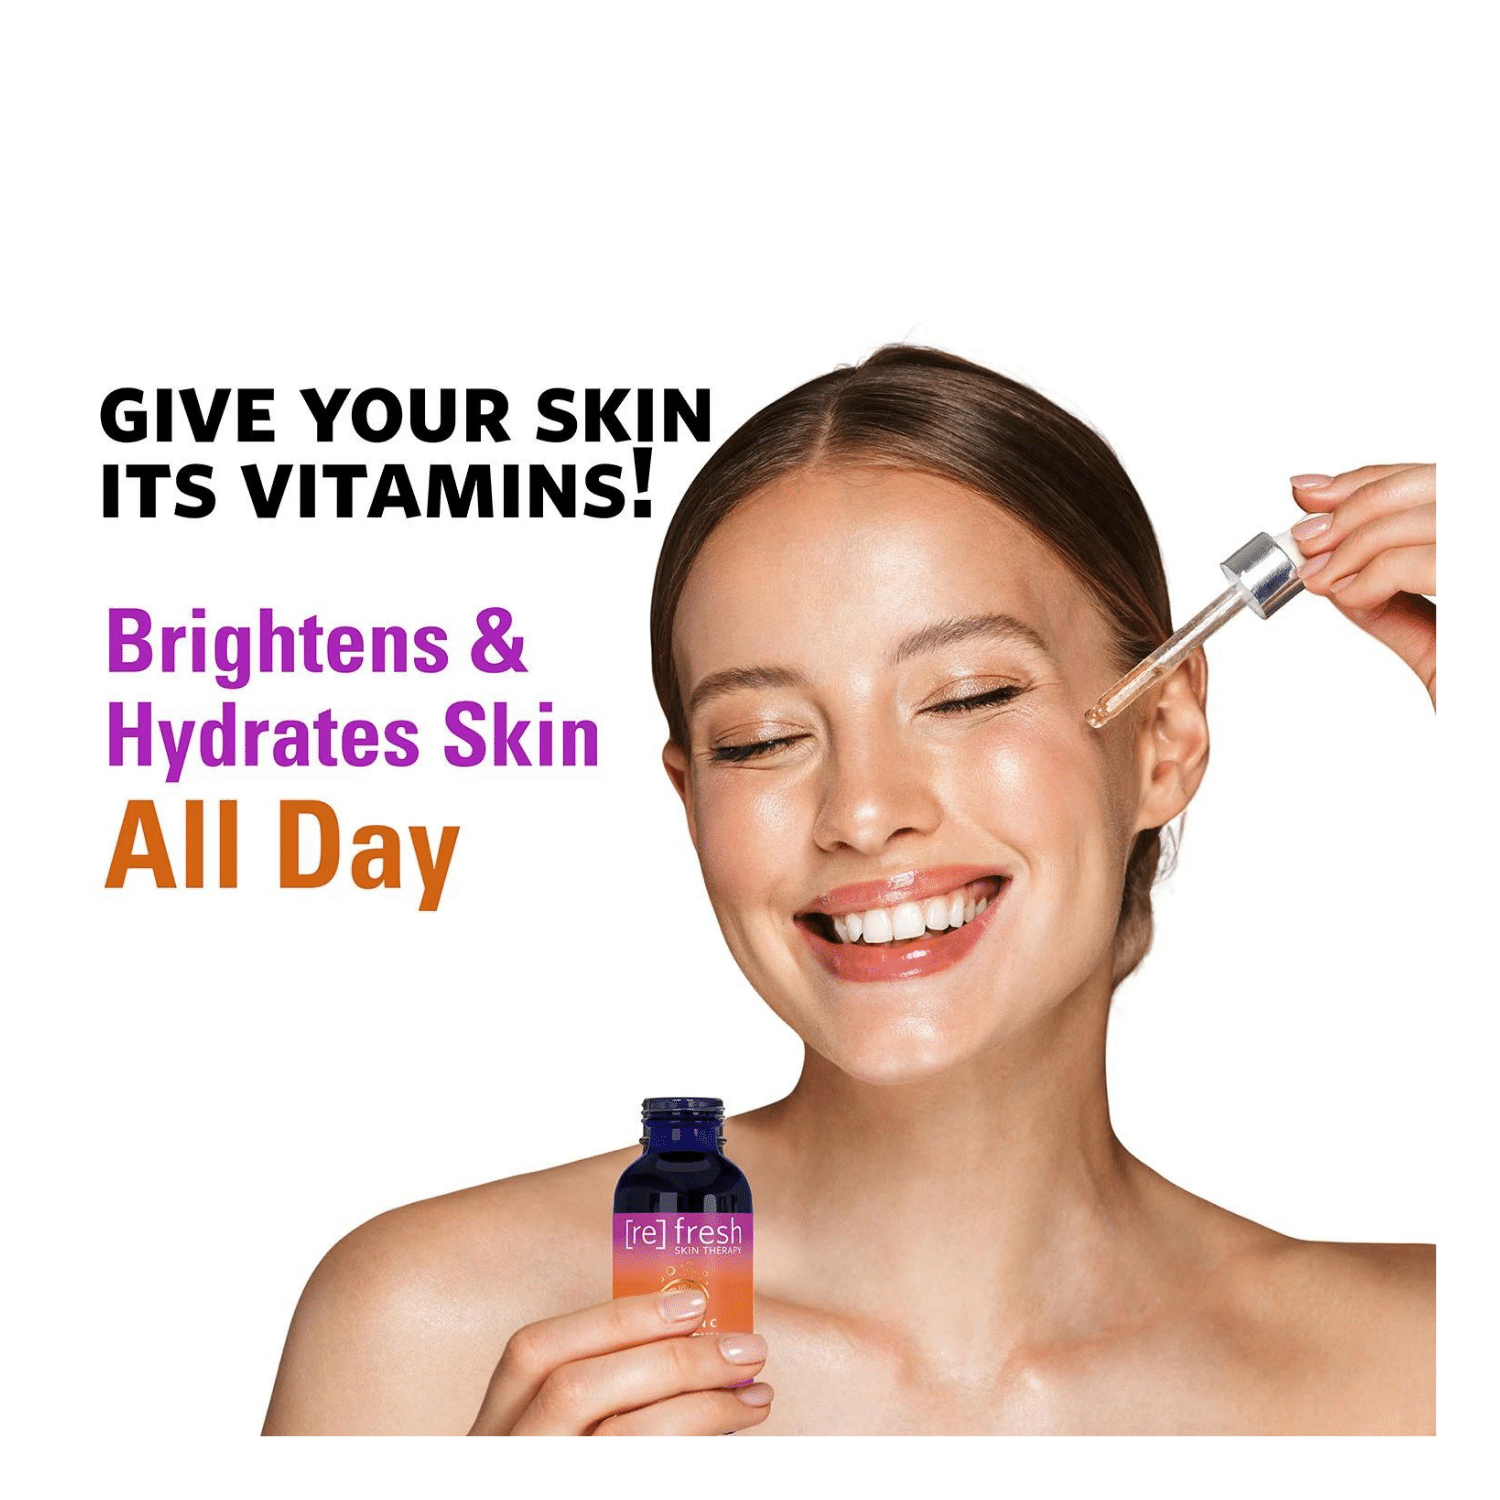 Refresh Skin Vitamin C Day Serum Twin Pack (1 fl. oz., 2 pk.)